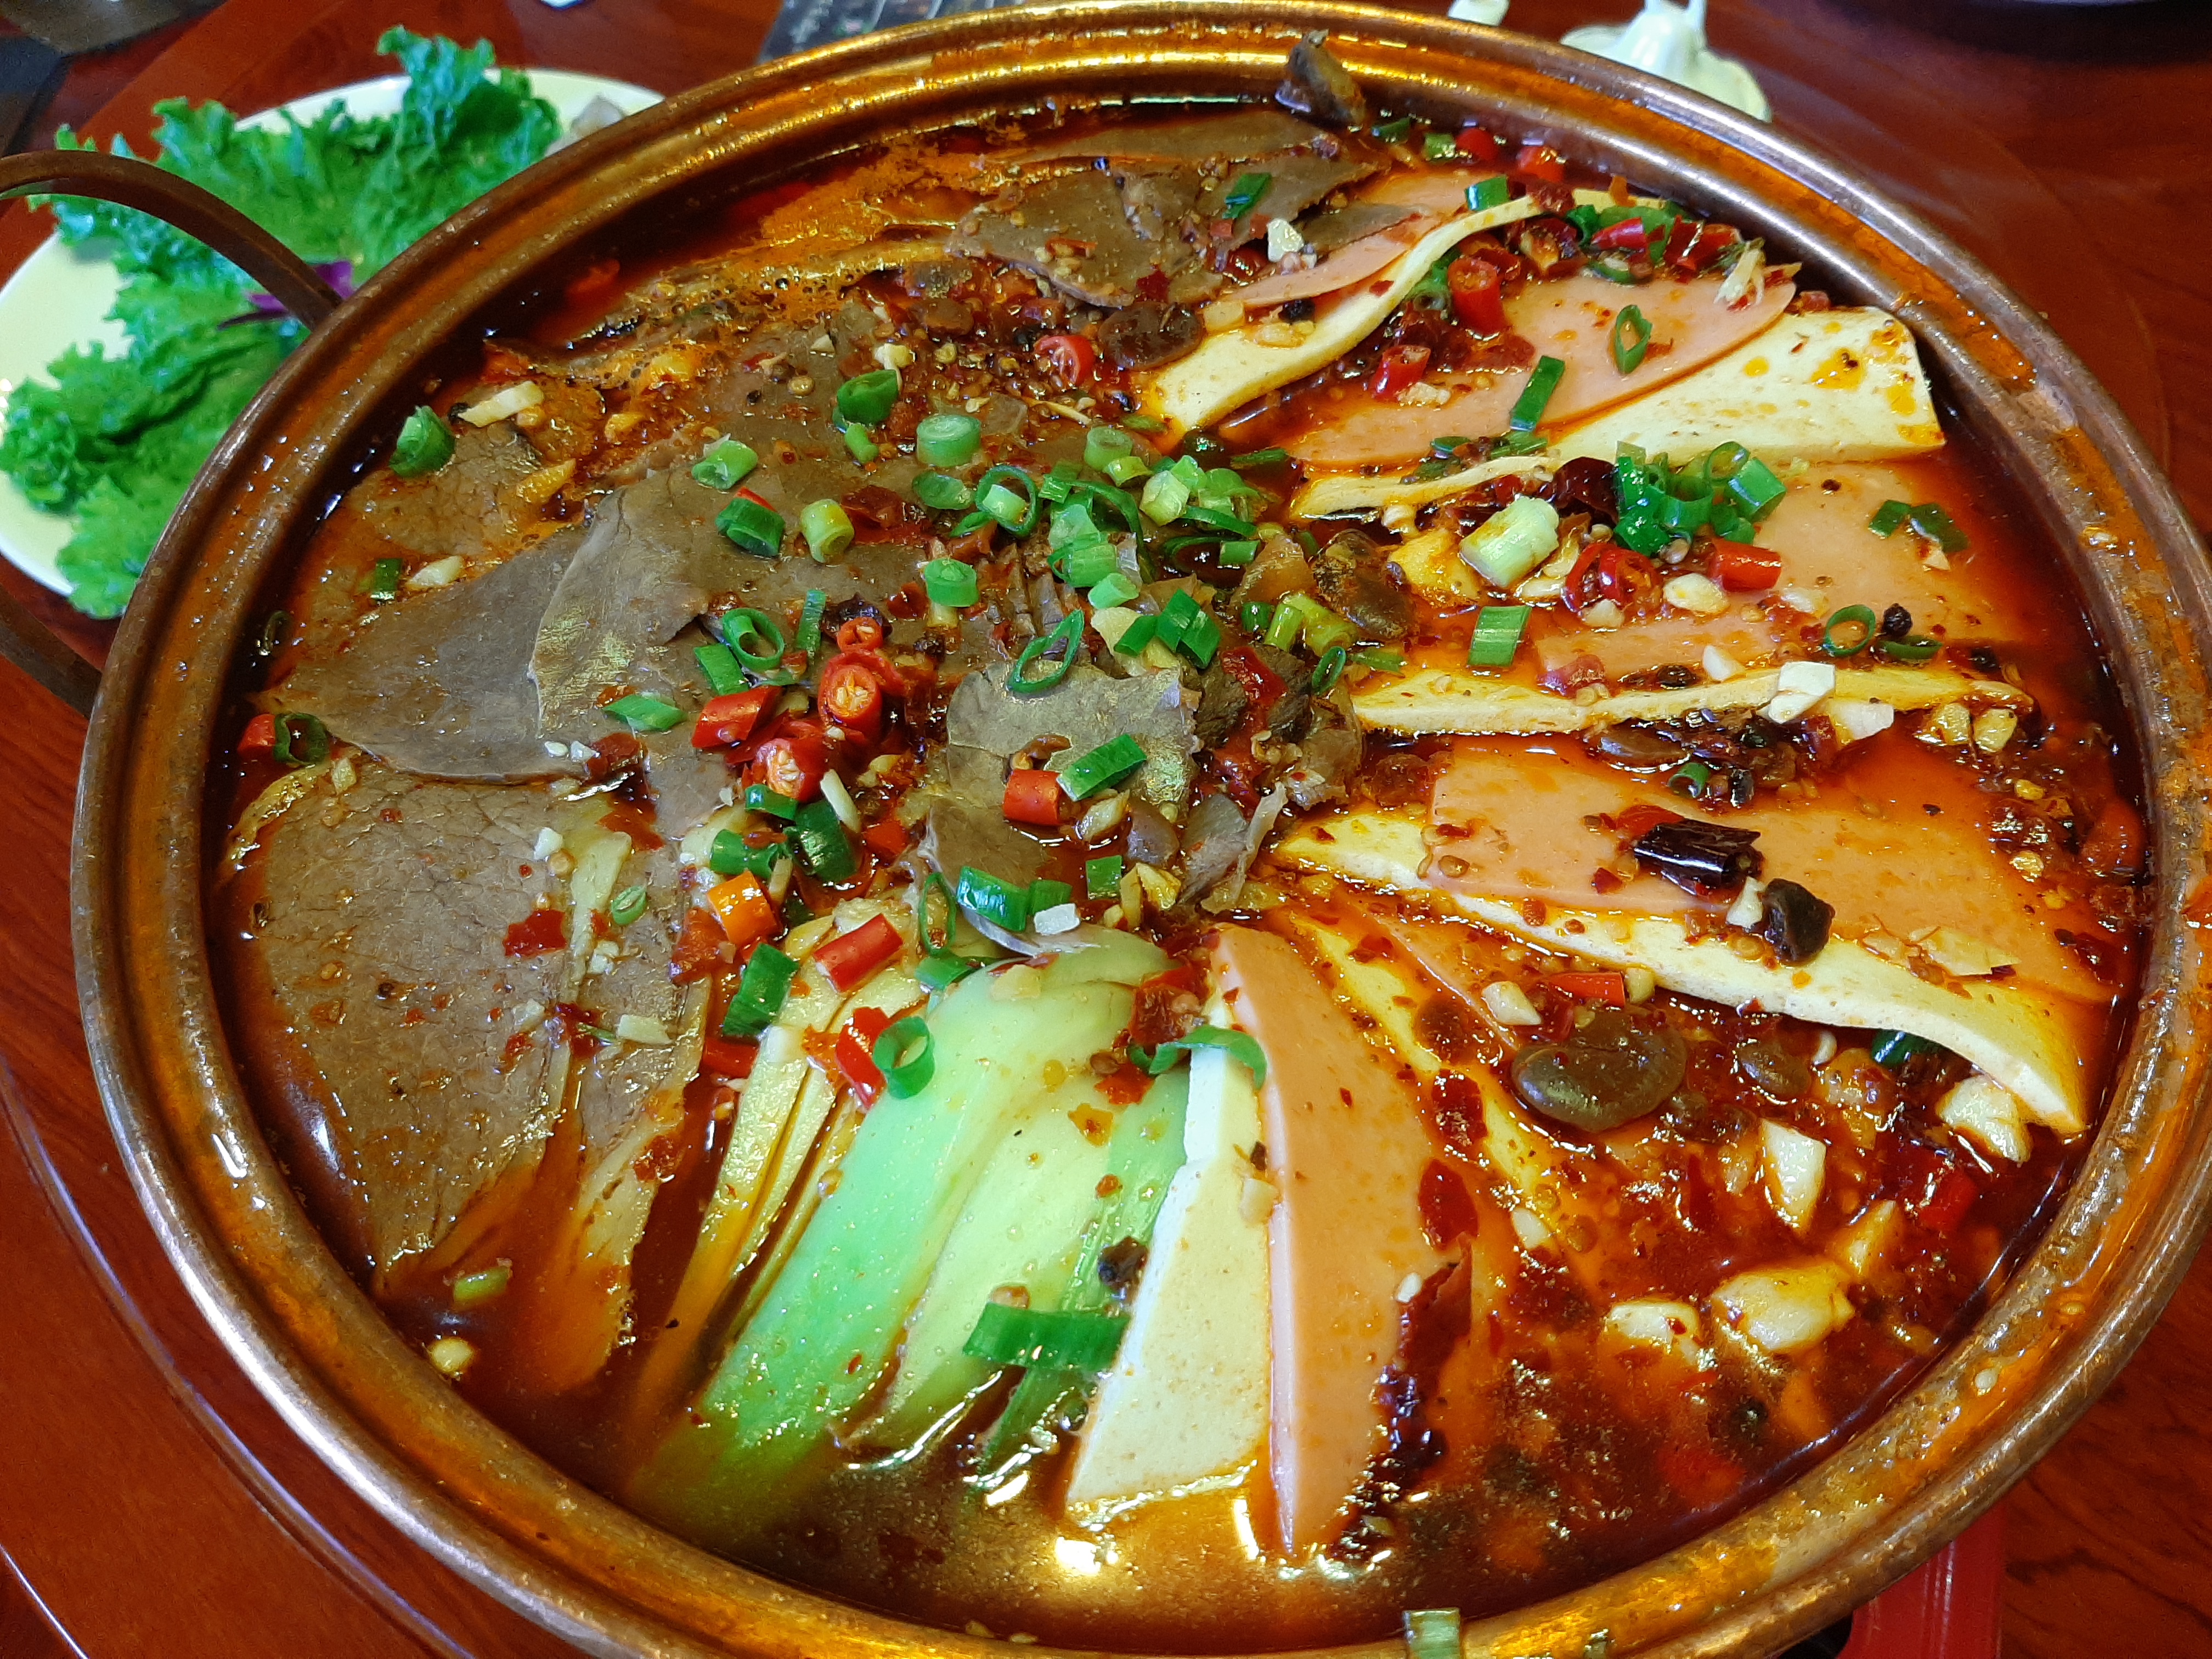 Tibetan fondue - A local traditional dish